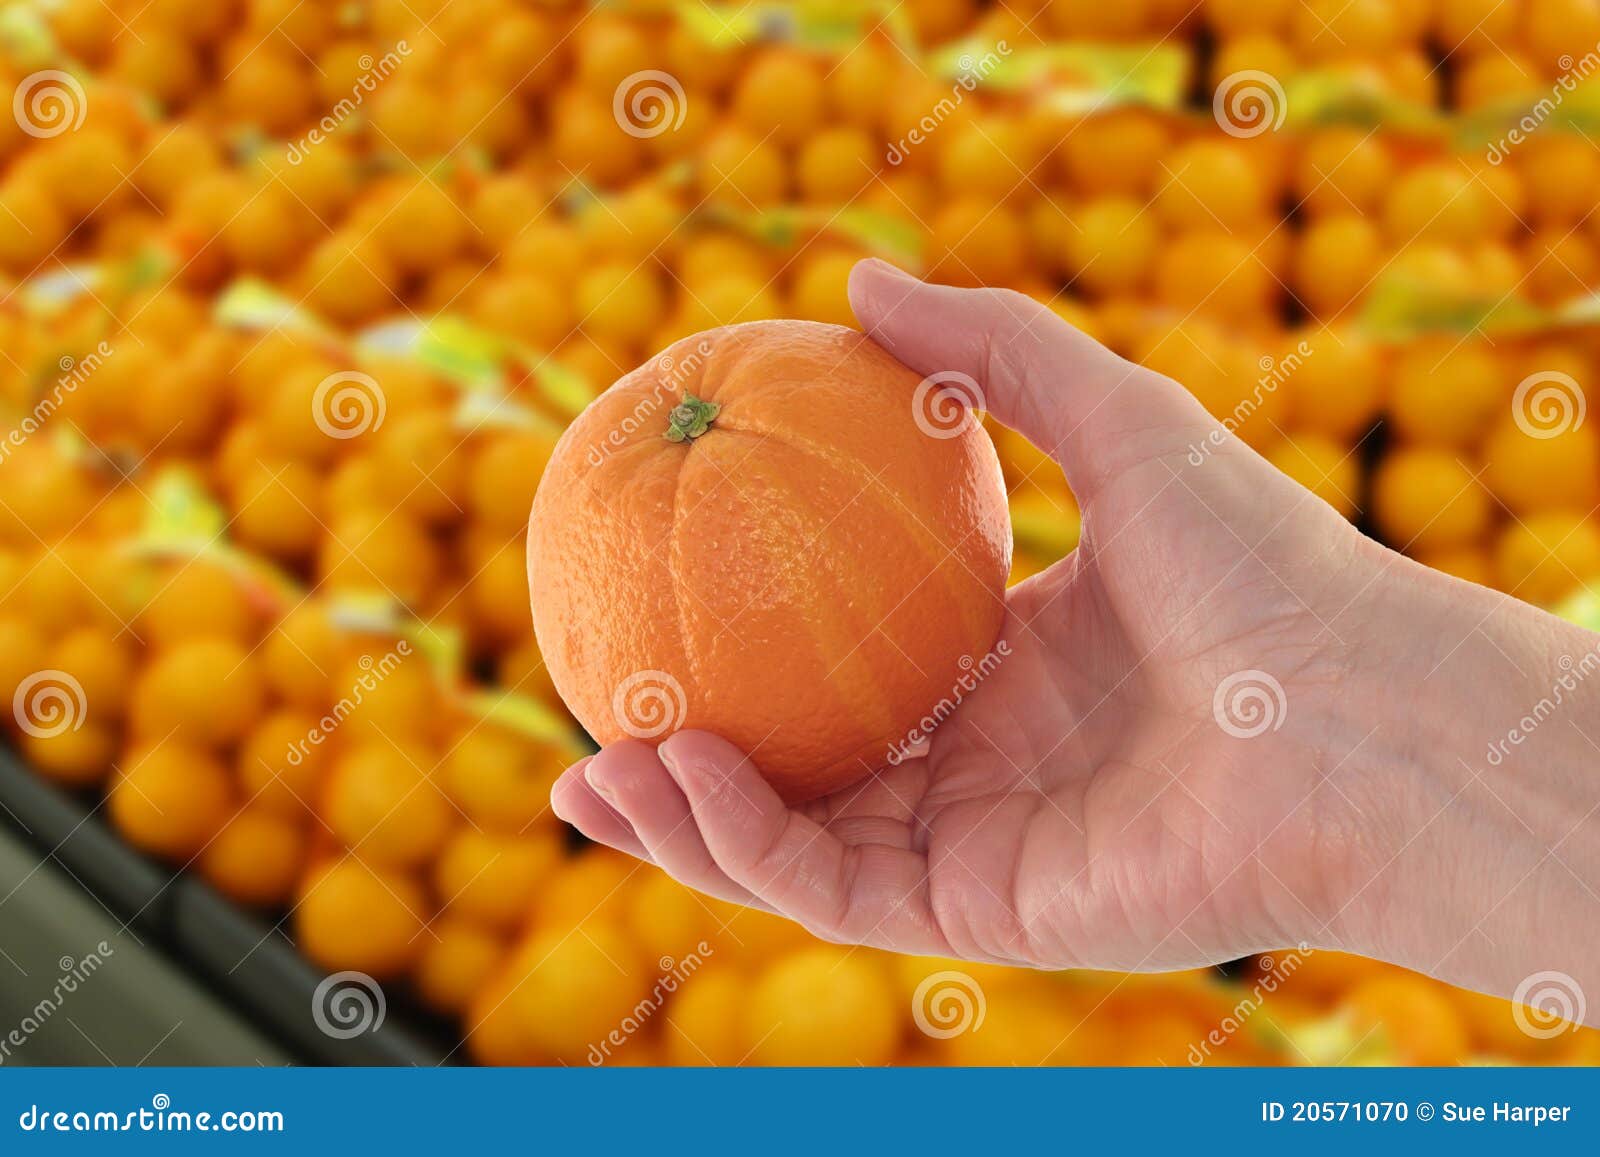 Hand Holding Orange In Market Stock Photo - Image of hand ...